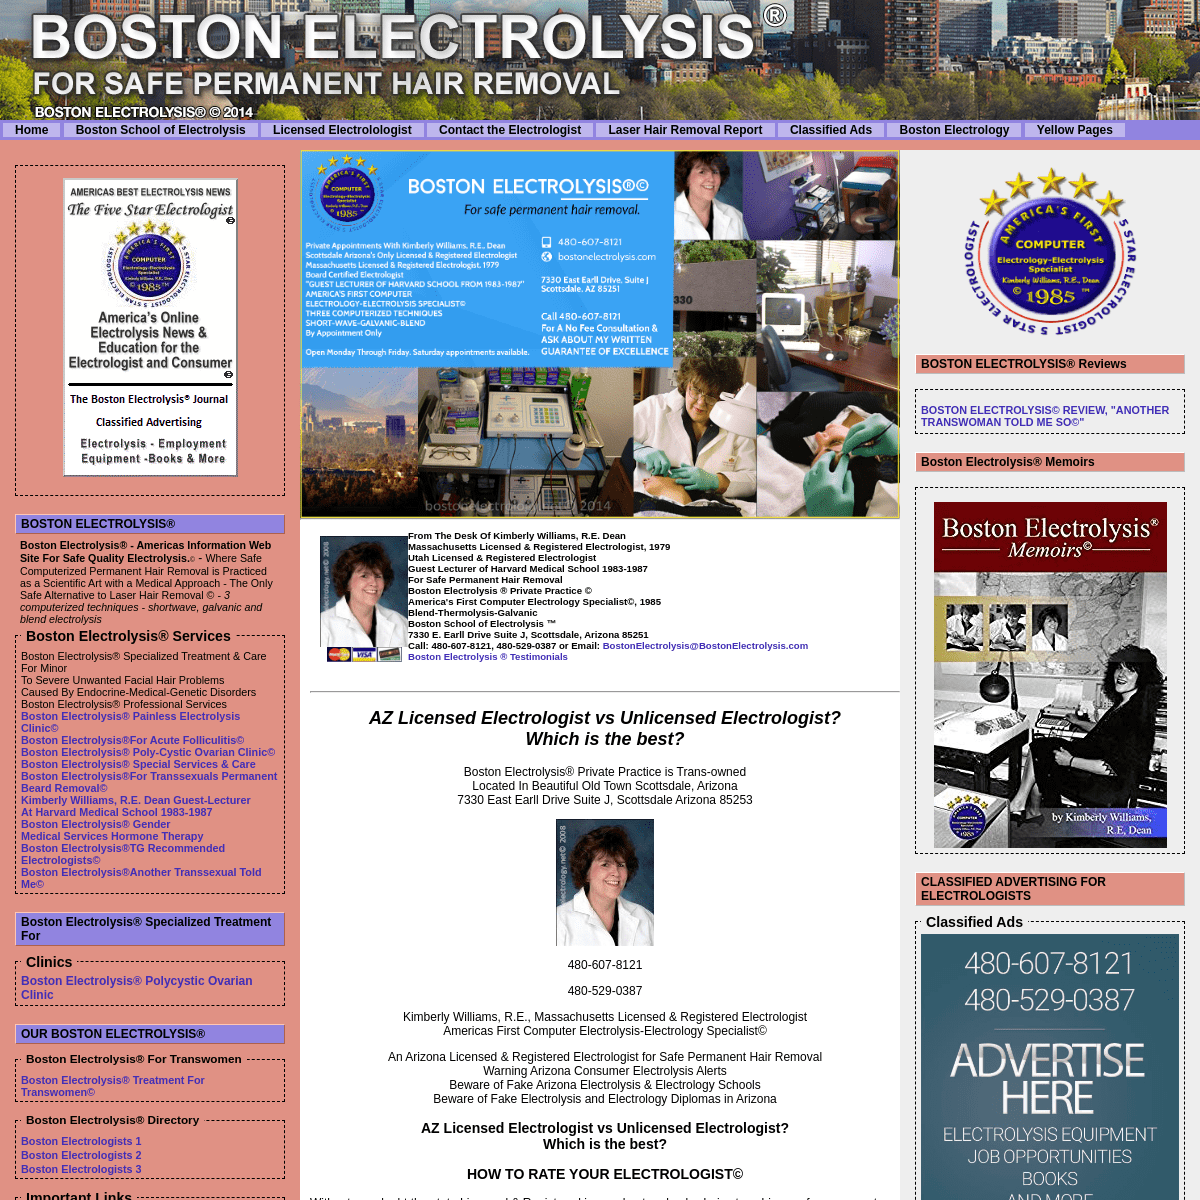 A complete backup of bostonelectrolysis.com